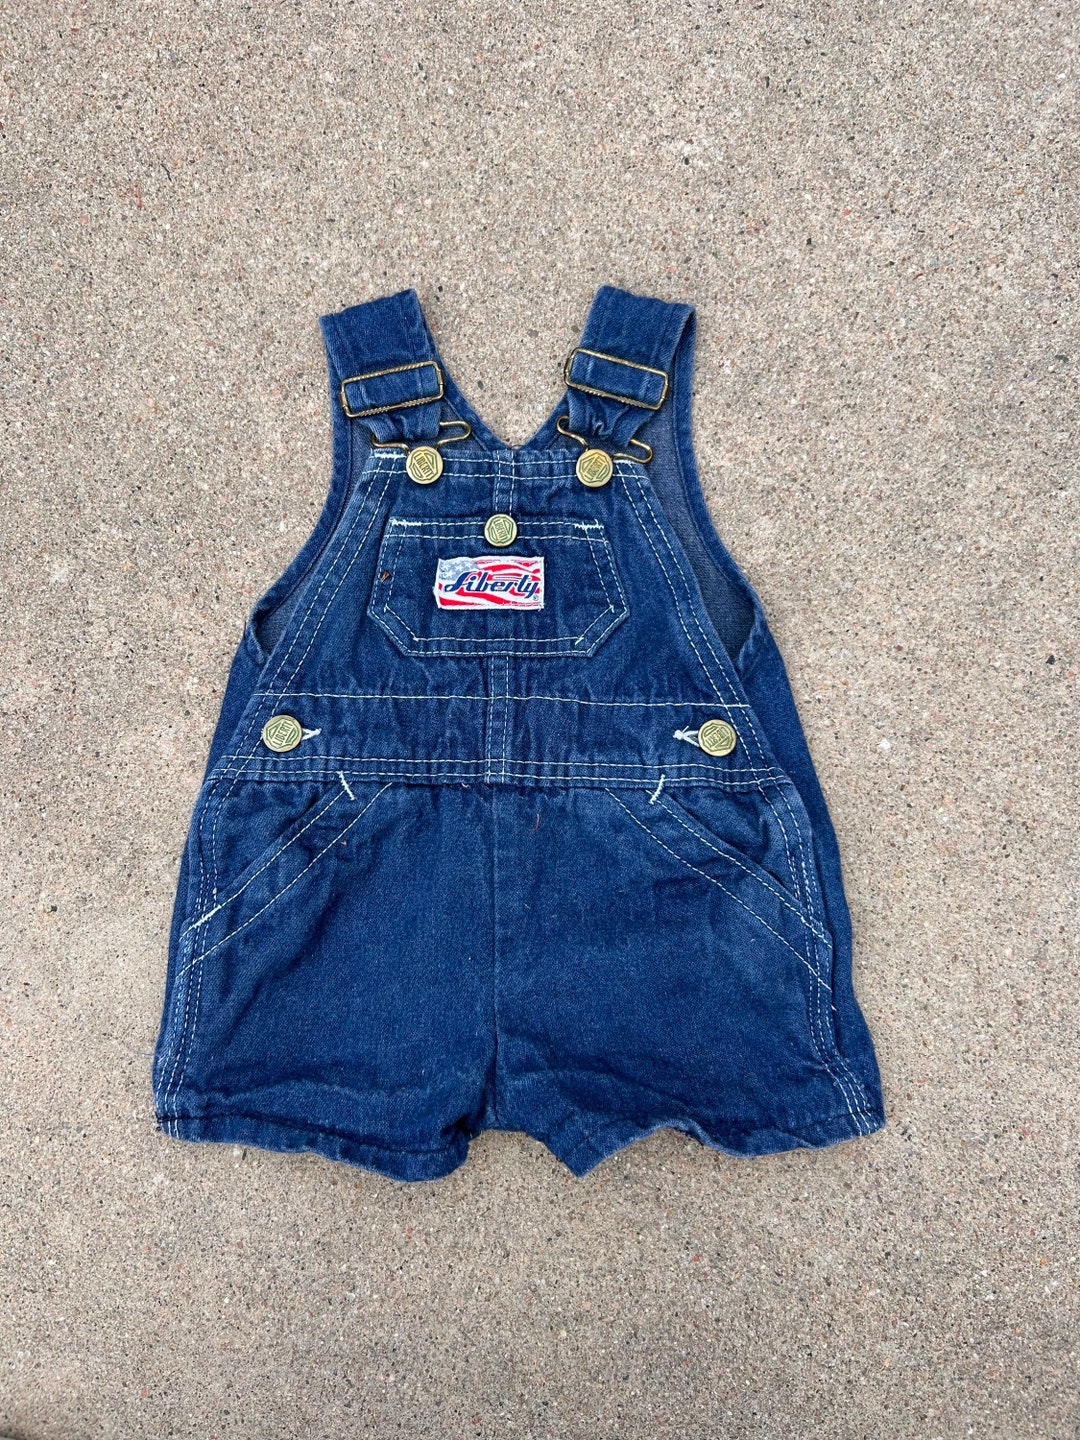 Vintage Baby Denim Shortalls Overalls Liberty Overalls Size - Etsy